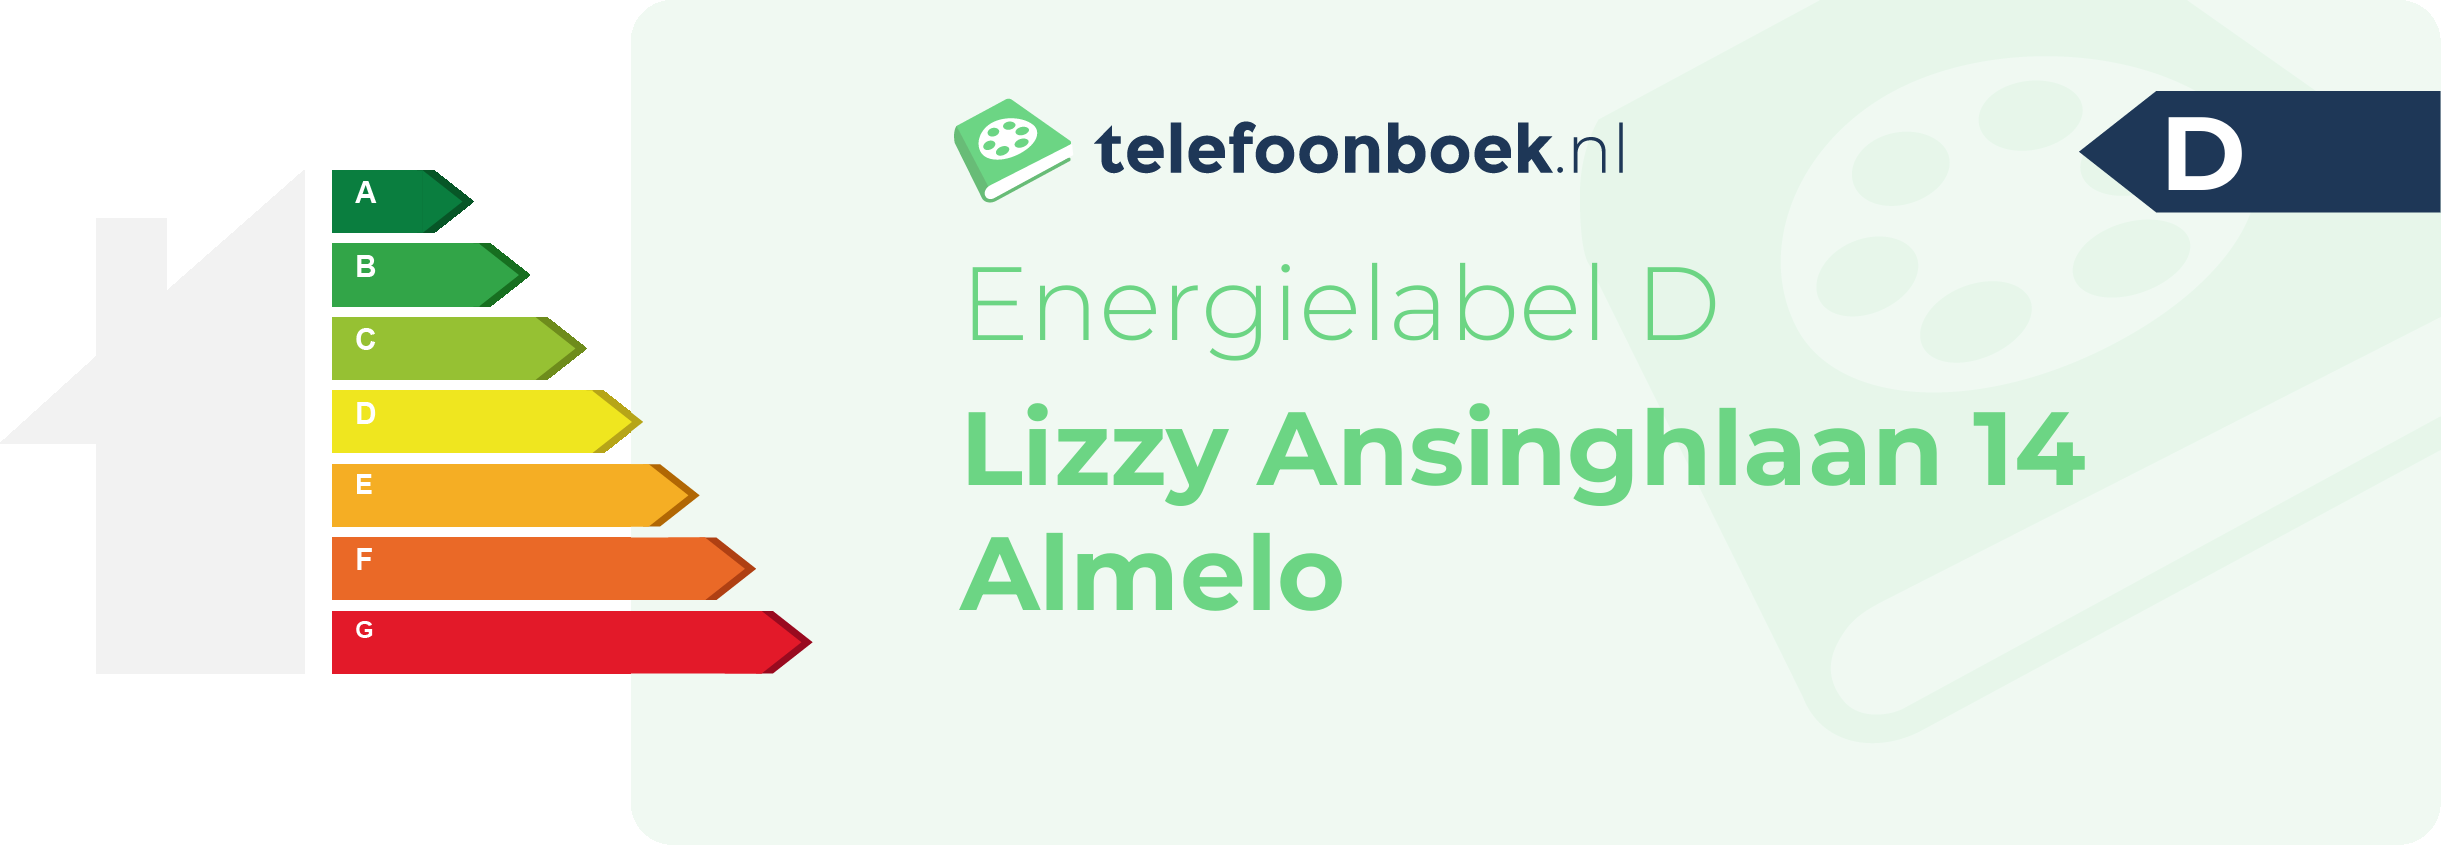 Energielabel Lizzy Ansinghlaan 14 Almelo